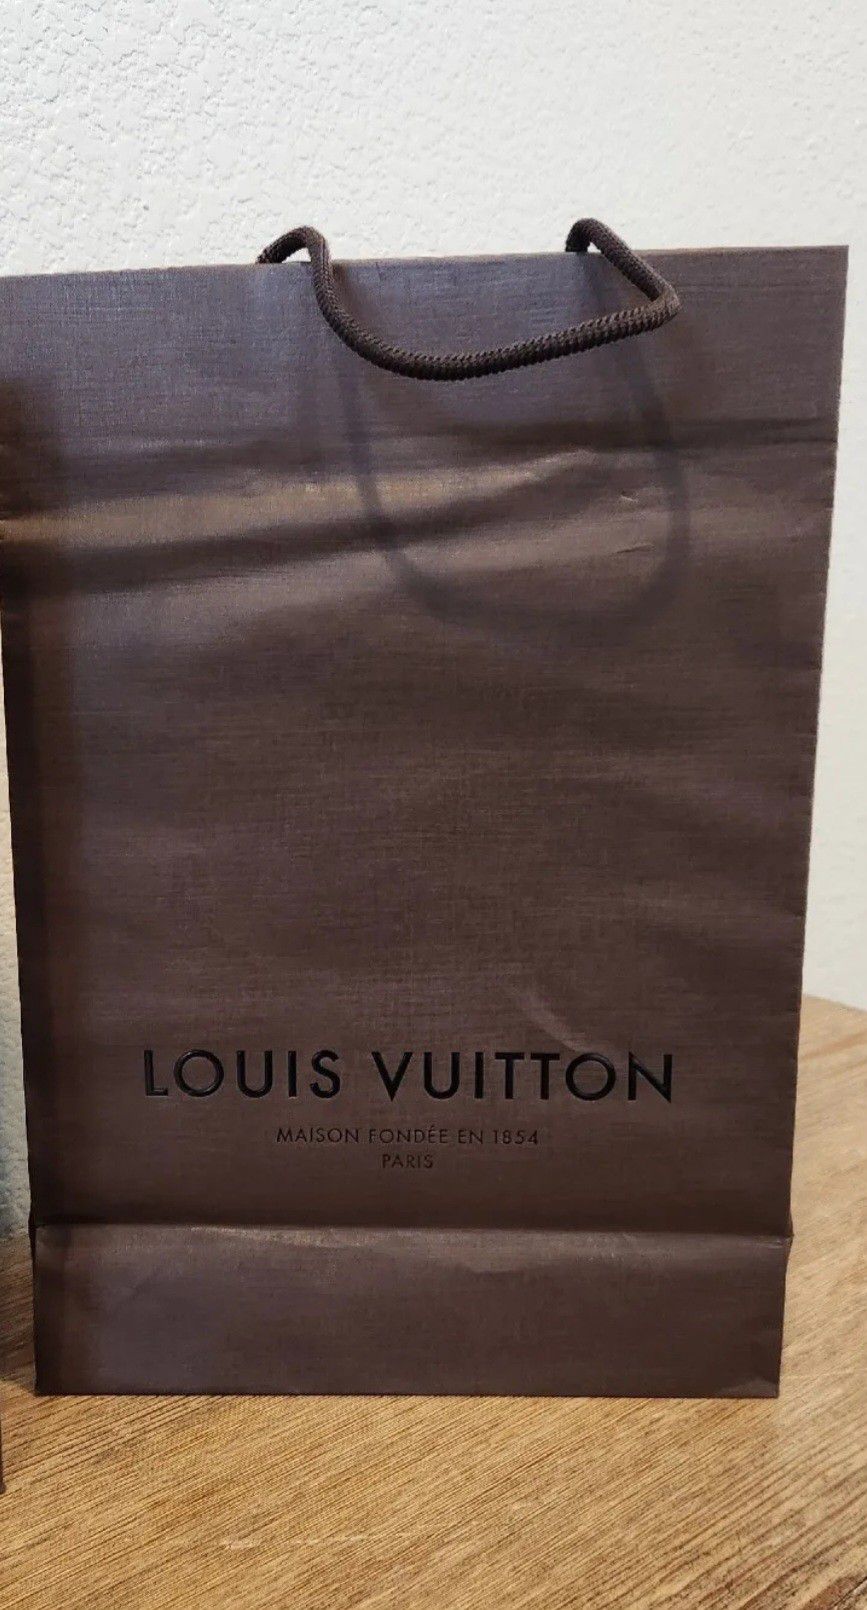 Louis Vuitton - Kensington - Authentic for Sale in Temecula, CA - OfferUp